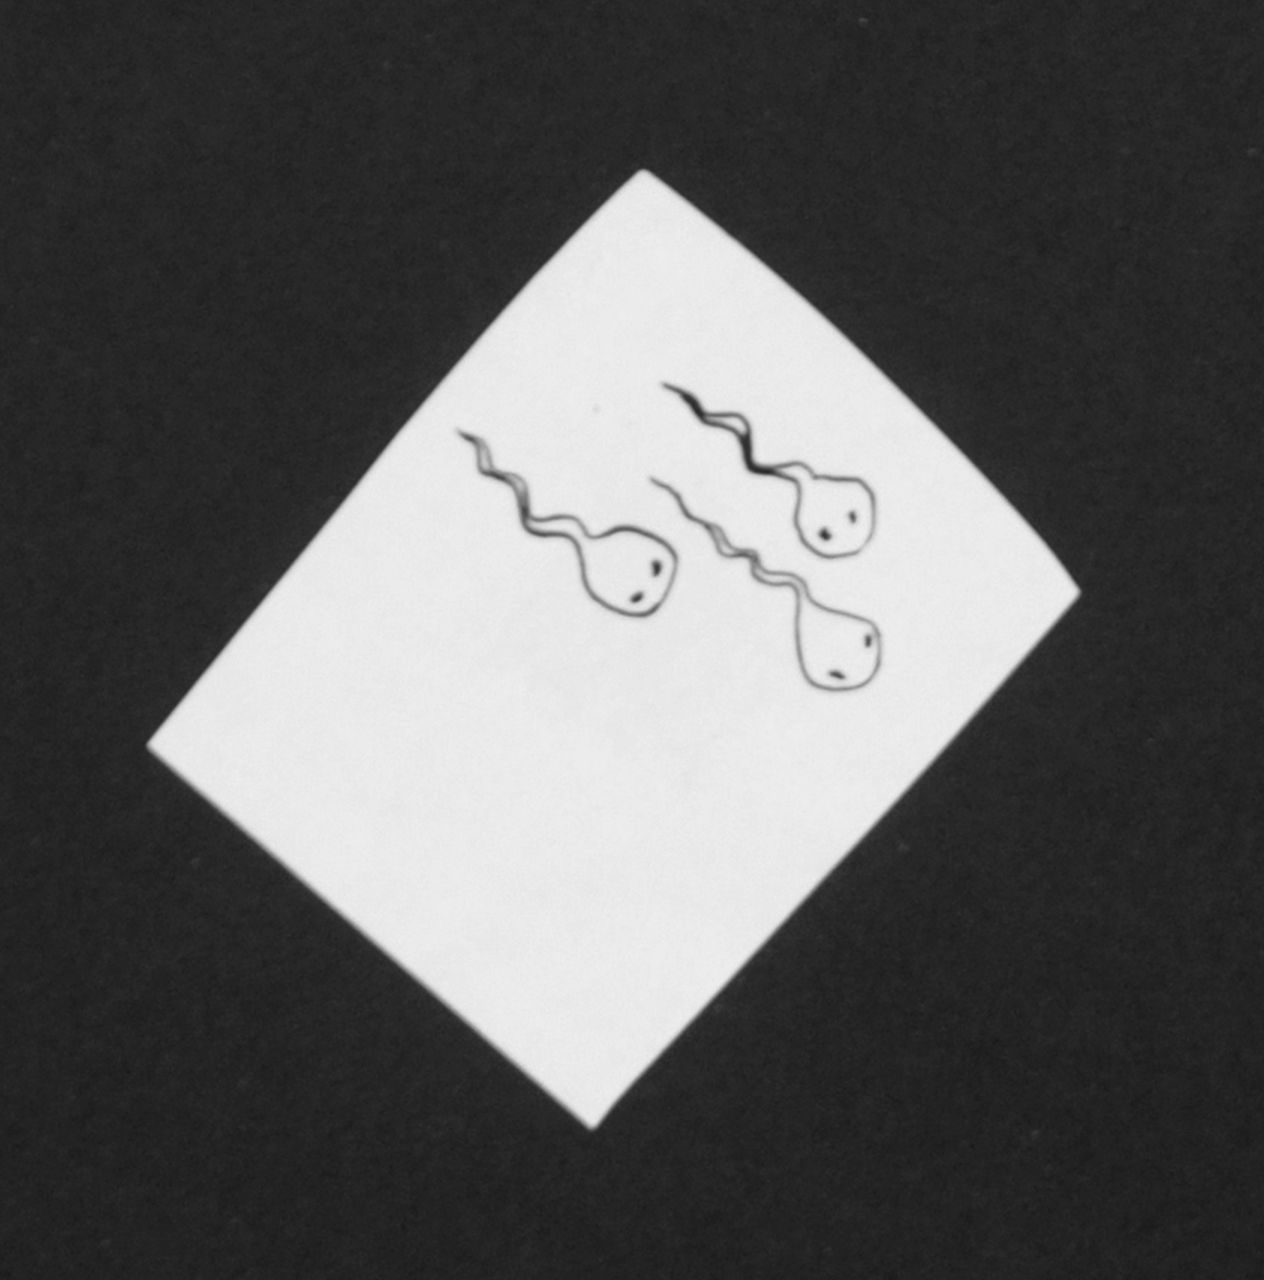 Oranje-Nassau (Prinses Beatrix) B.W.A. van | Beatrix Wilhelmina Armgard van Oranje-Nassau (Prinses Beatrix), Three tadpoles, pencil and black ink on paper 5.2 x 4.1 cm, executed August 1960